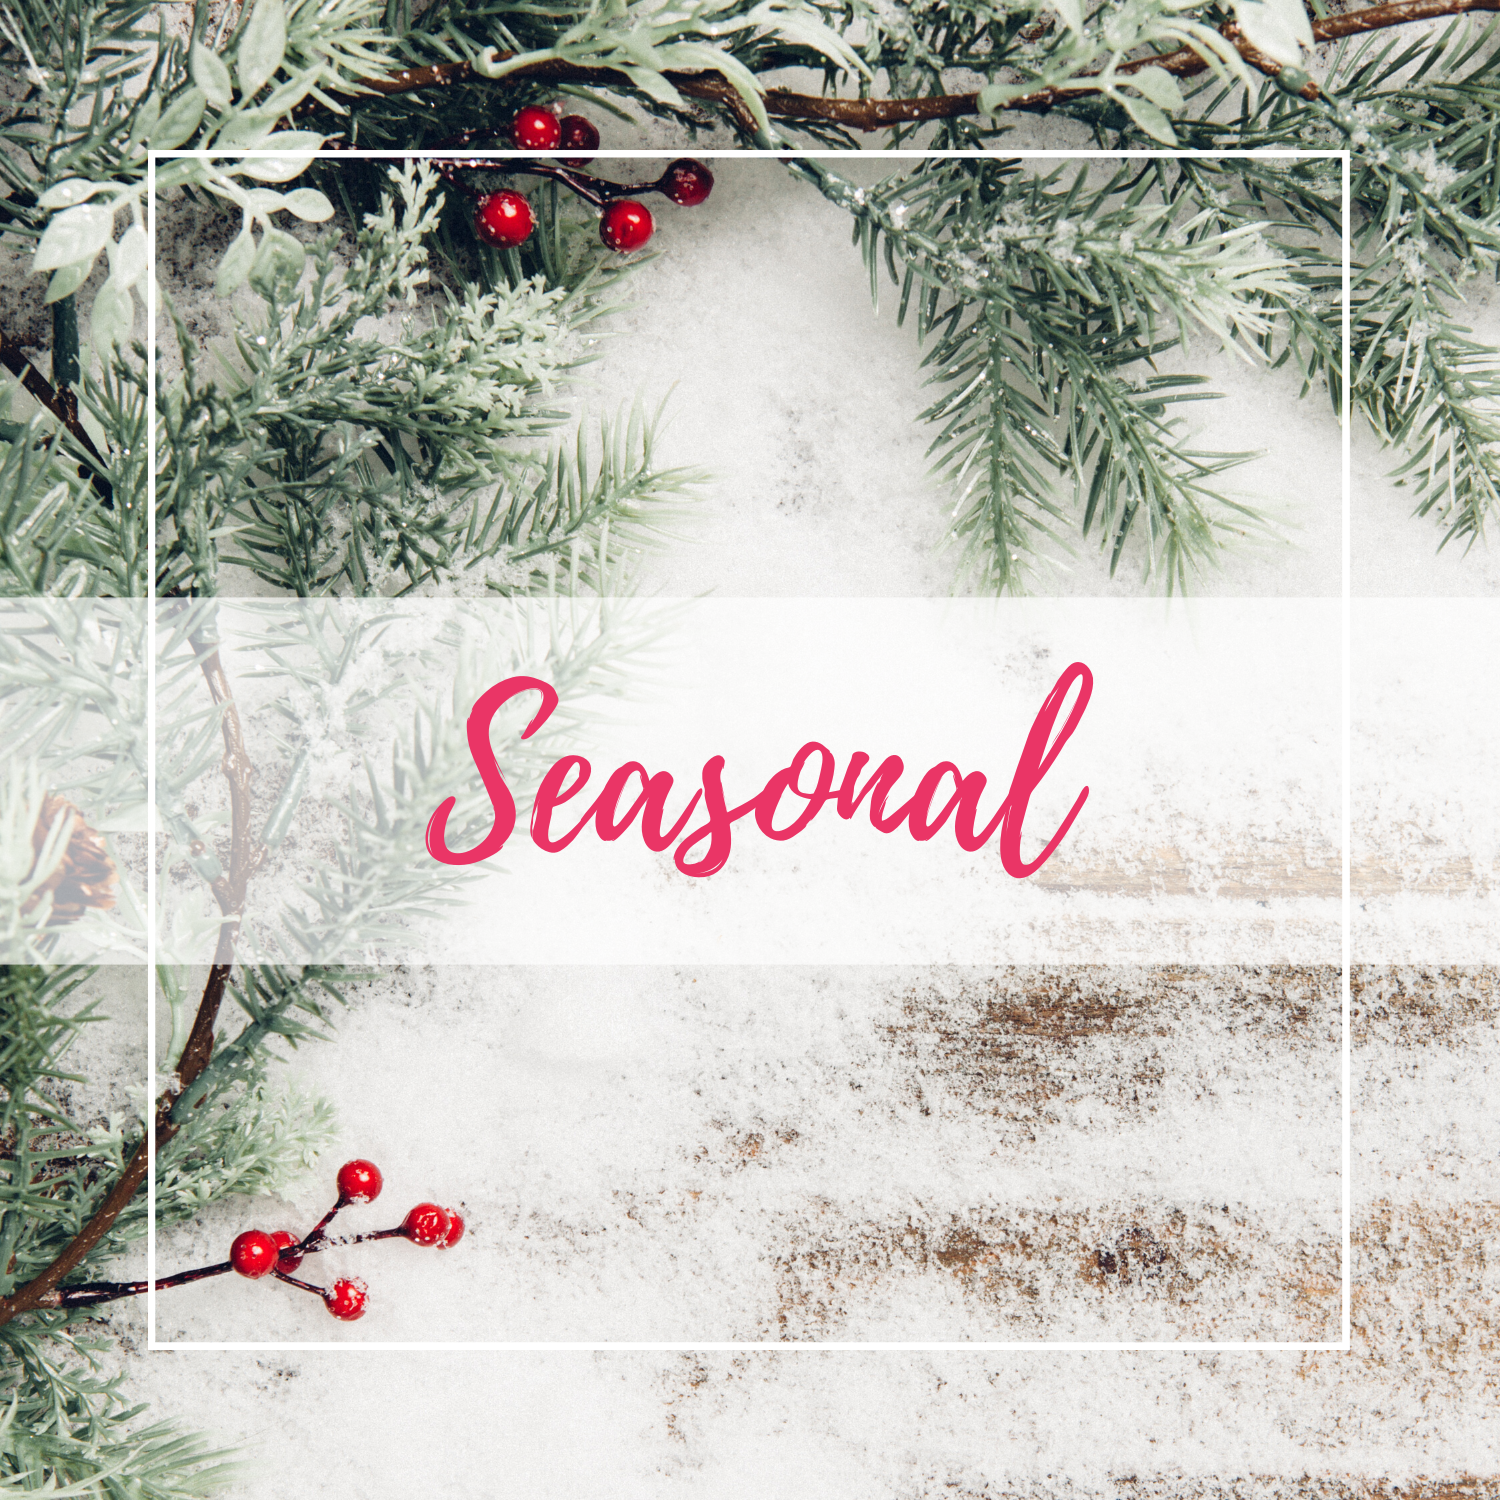 Seasonal Resources to make celebrations meaningful